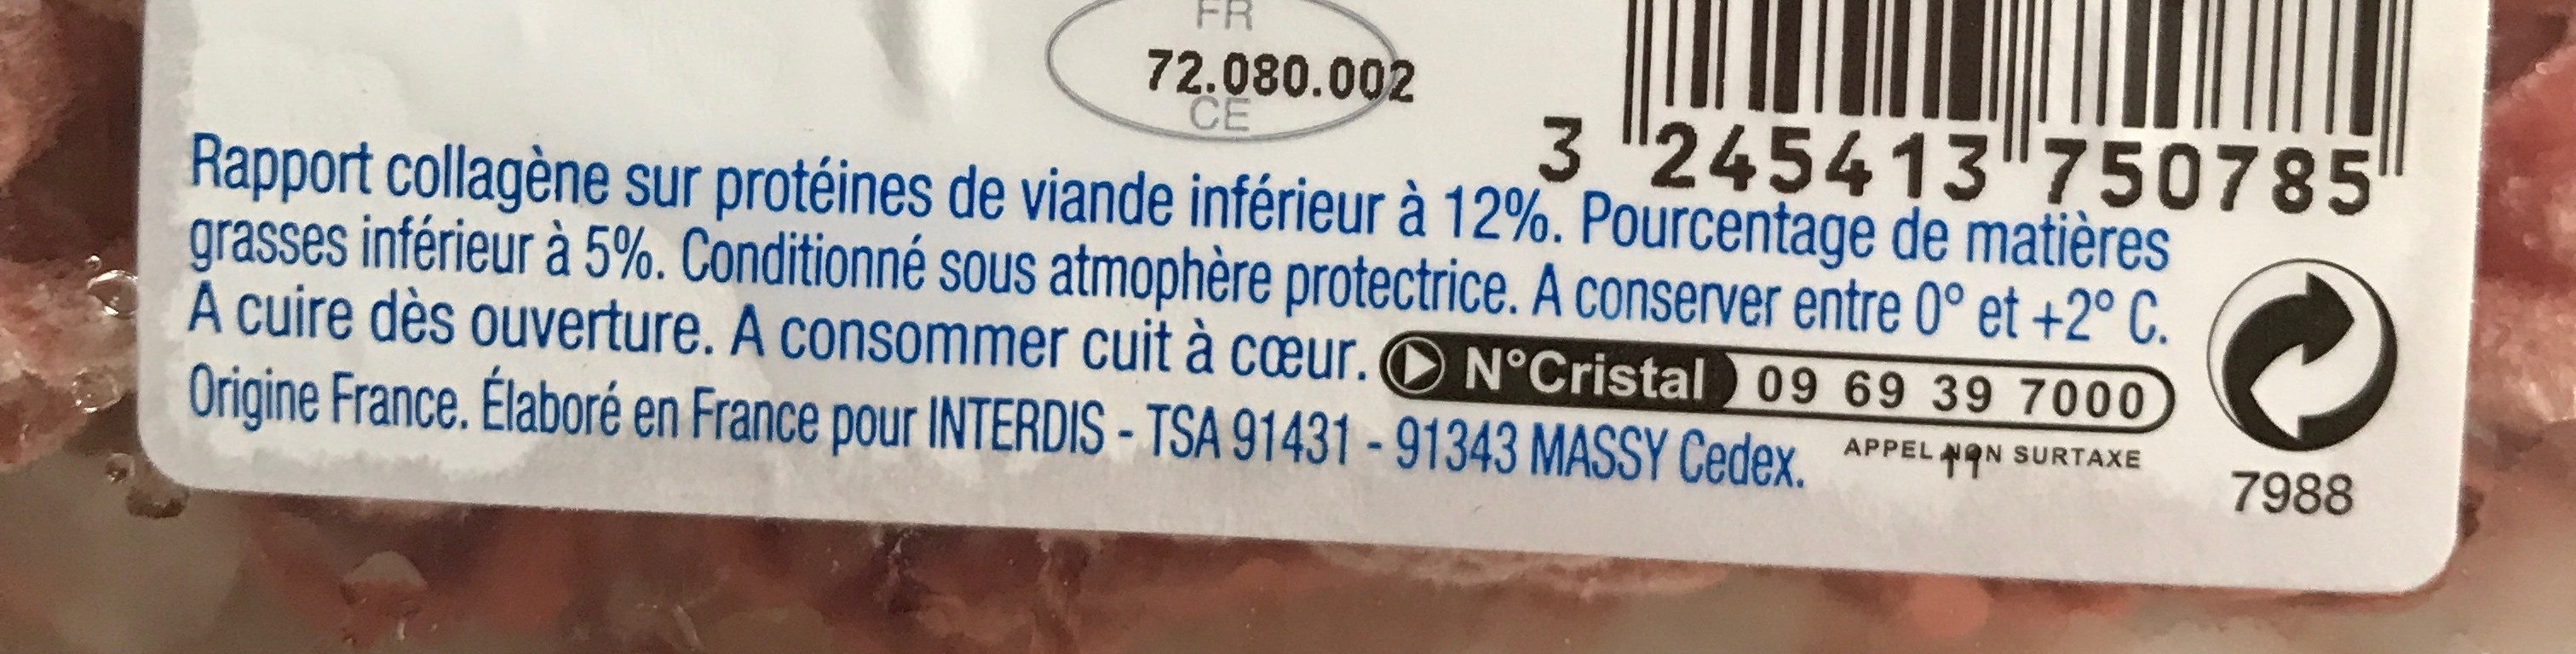 Viande hachée pur boeuf (5% MG) - Ingrediënten - fr